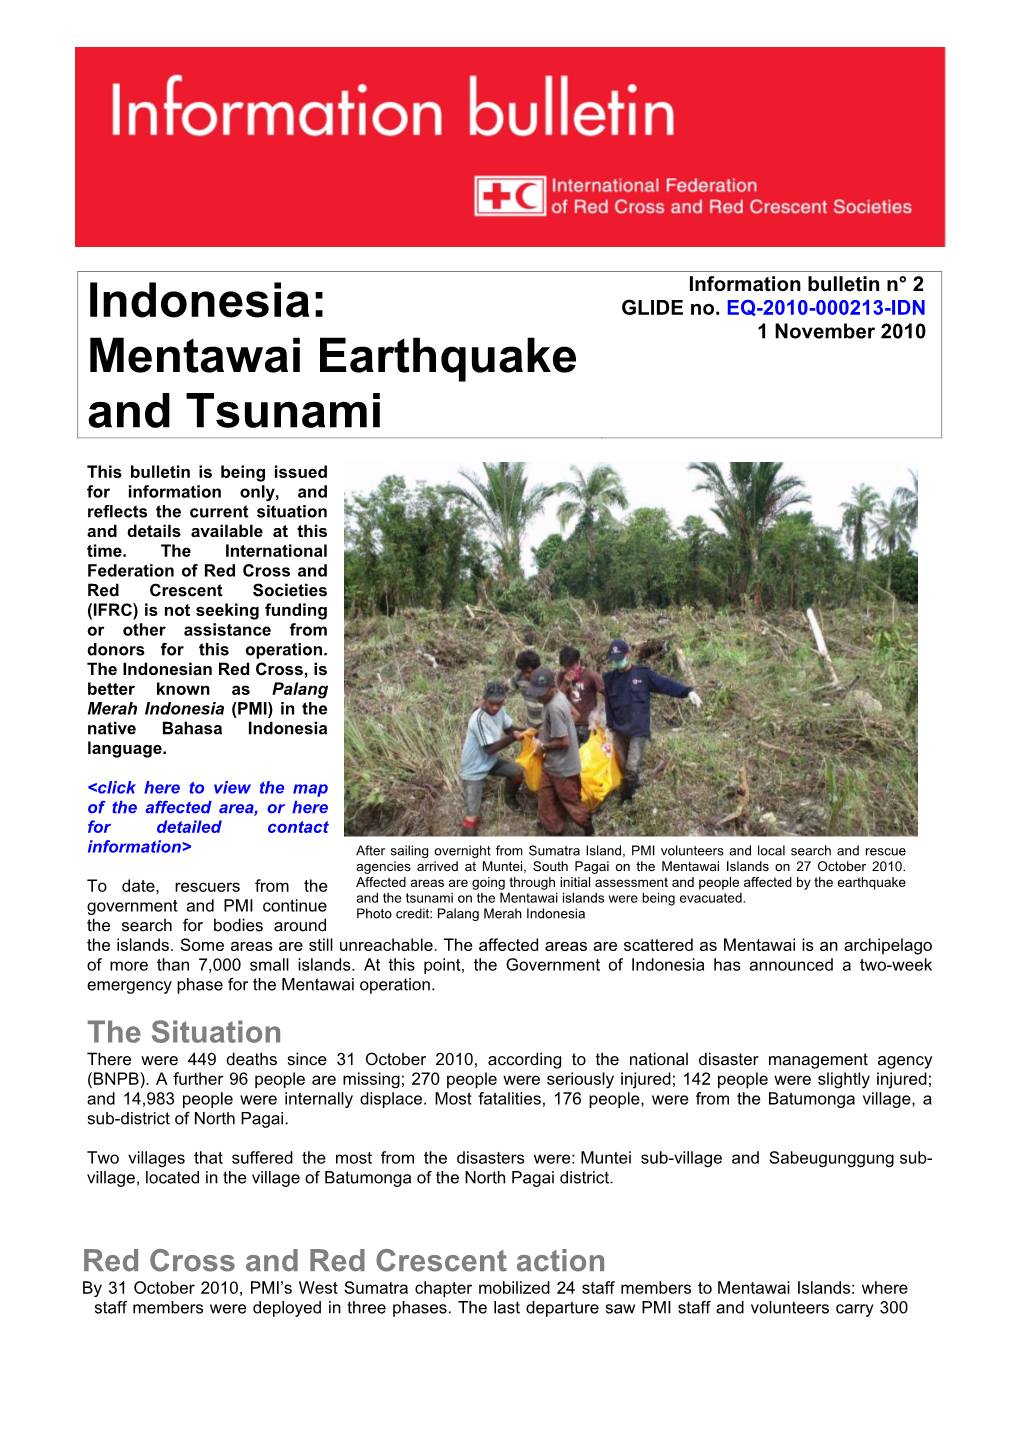 Indonesia: Mentawai Earthquake and Tsunami